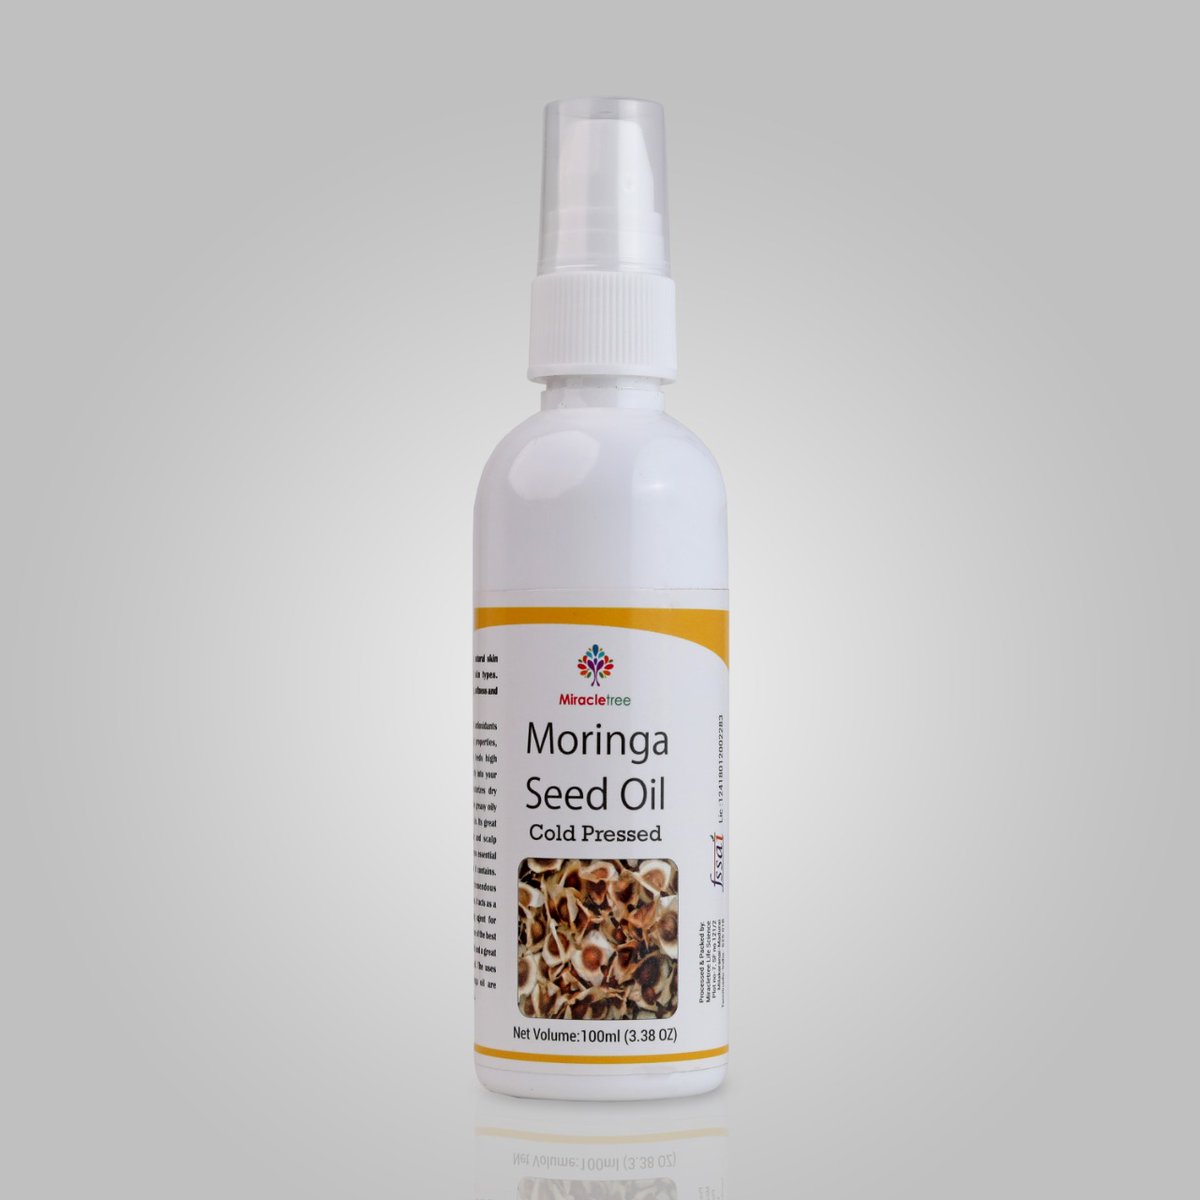 Moringa Seed oil
Moringa seed oil is a natural skin toner good for all skin types. Improves moisturizing softness and smoothness #Moringa #Moringaseedoil #bonestrength#greentea#protein#seedoil#MORINGA#healthy##Miracletree#Madurai